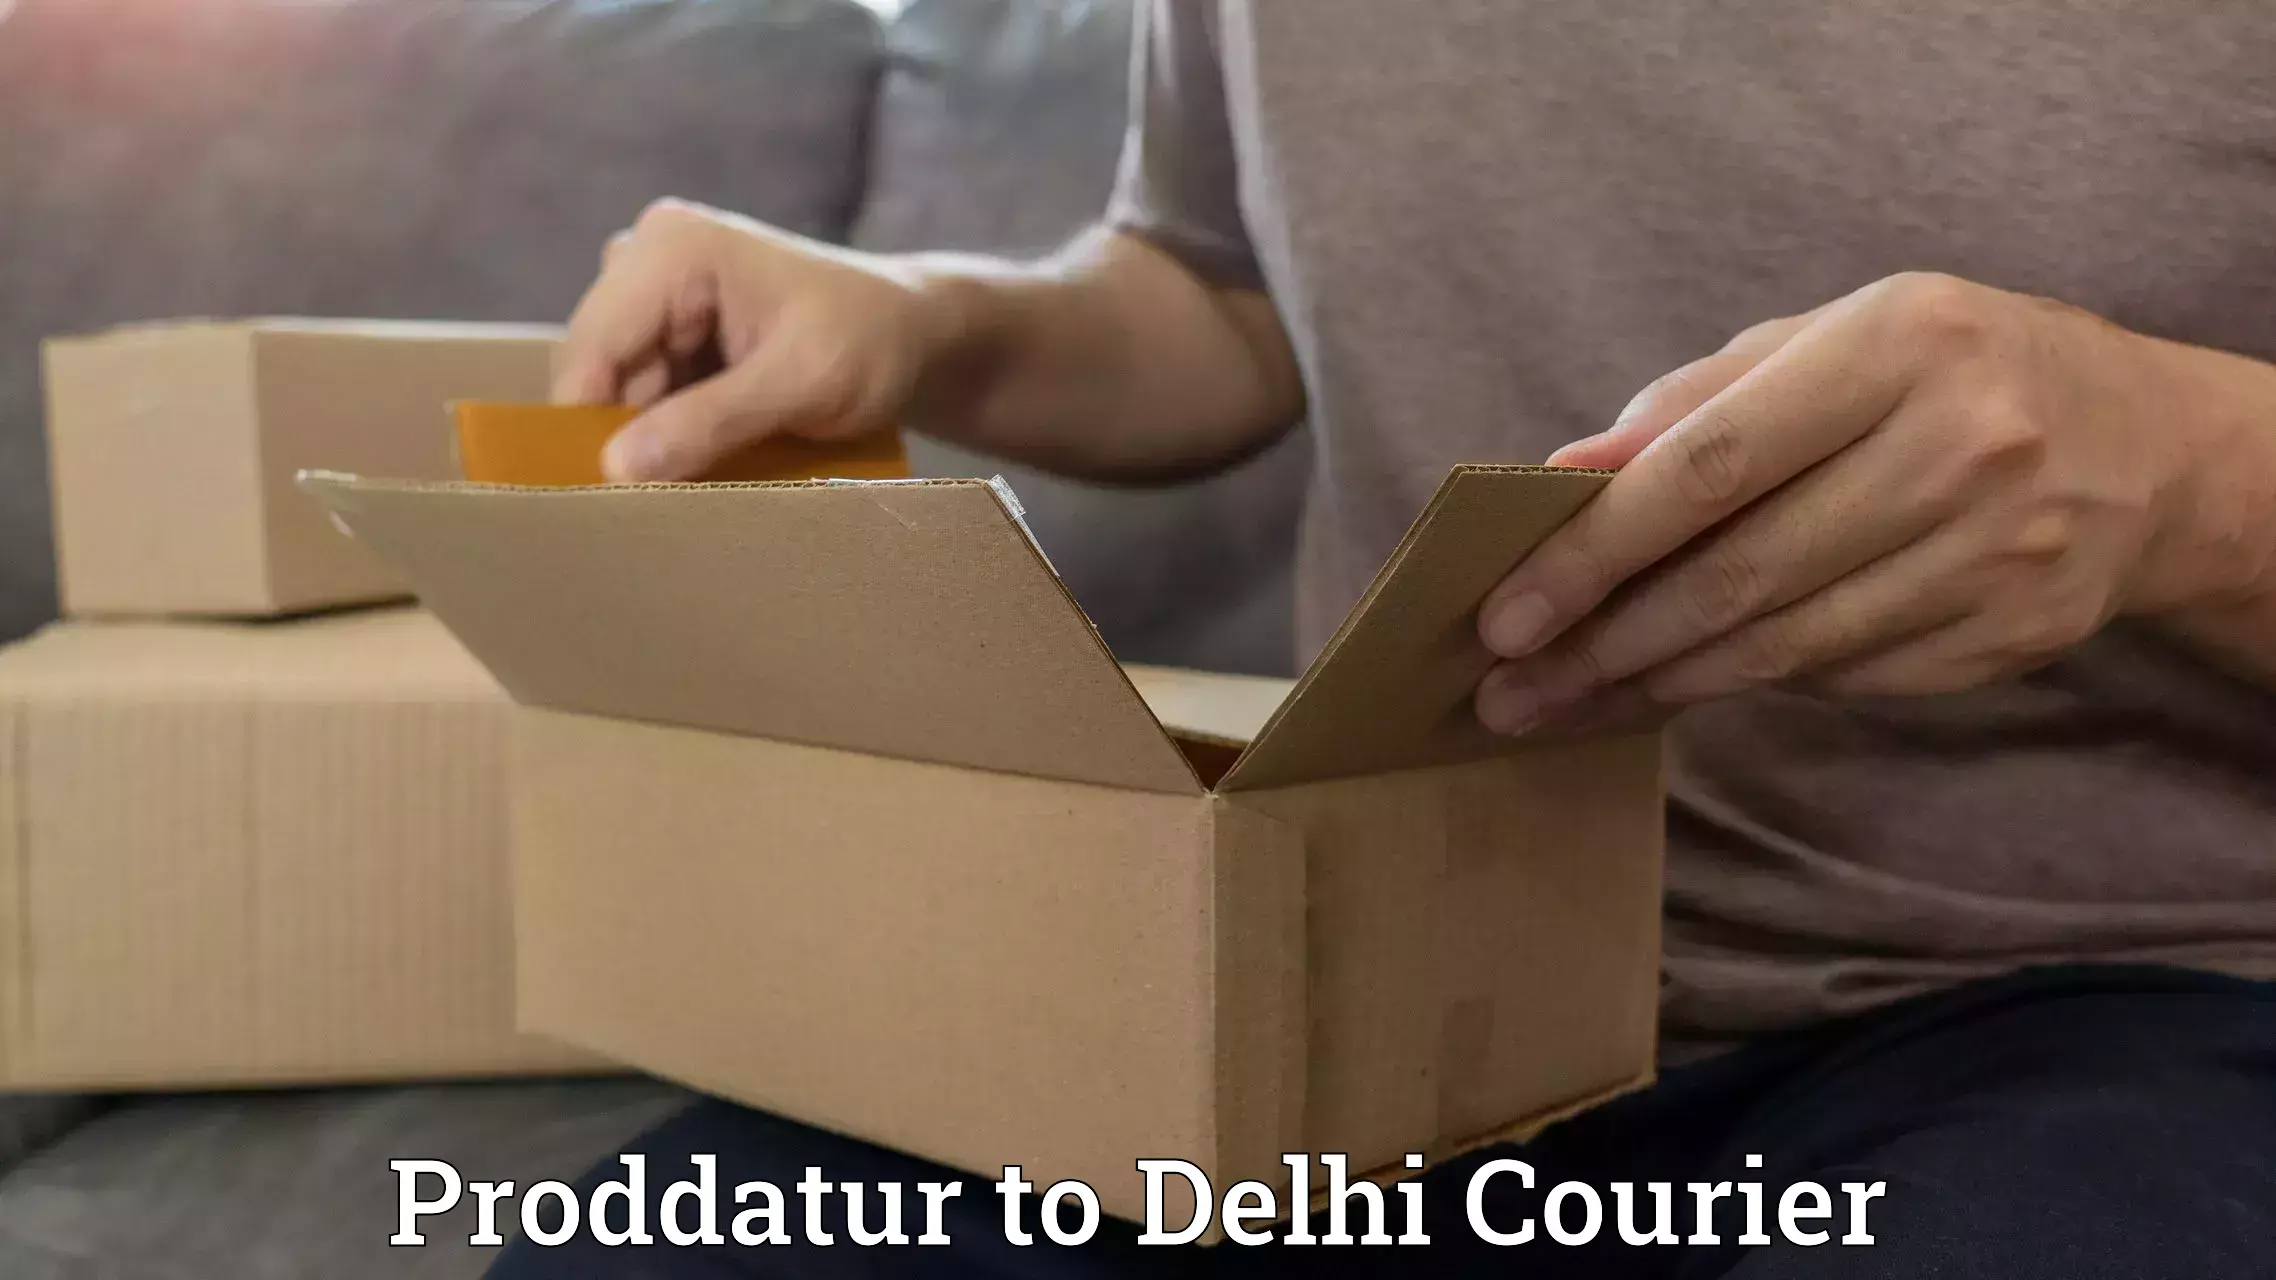 Customizable delivery plans Proddatur to East Delhi